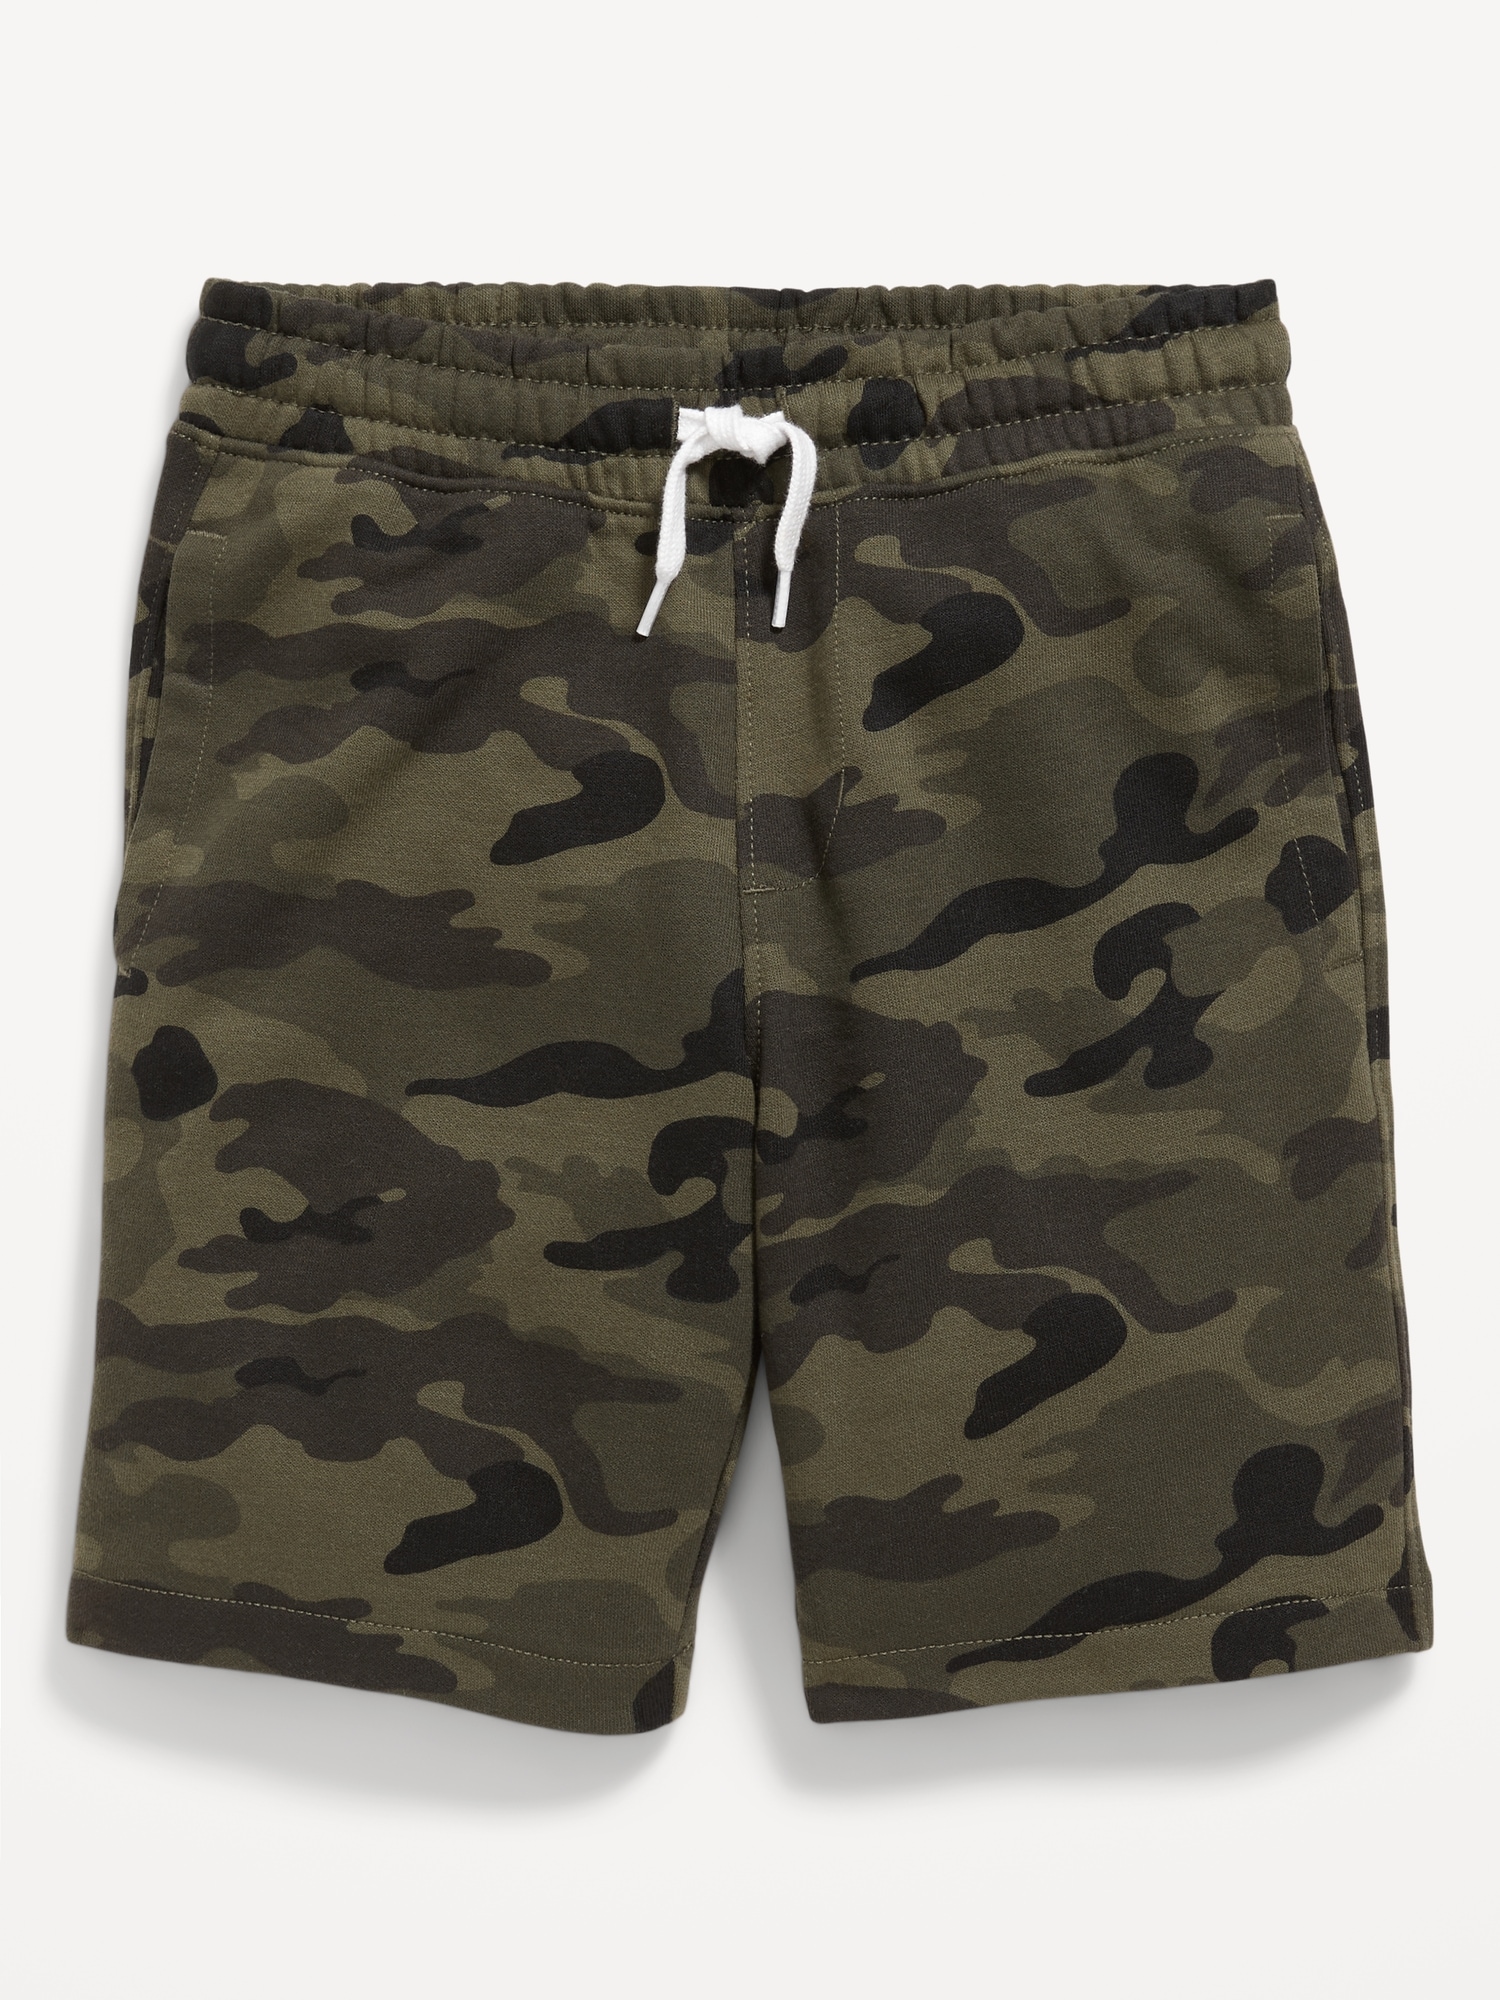 Fleece Jogger Shorts for Boys (At Knee) Hot Deal